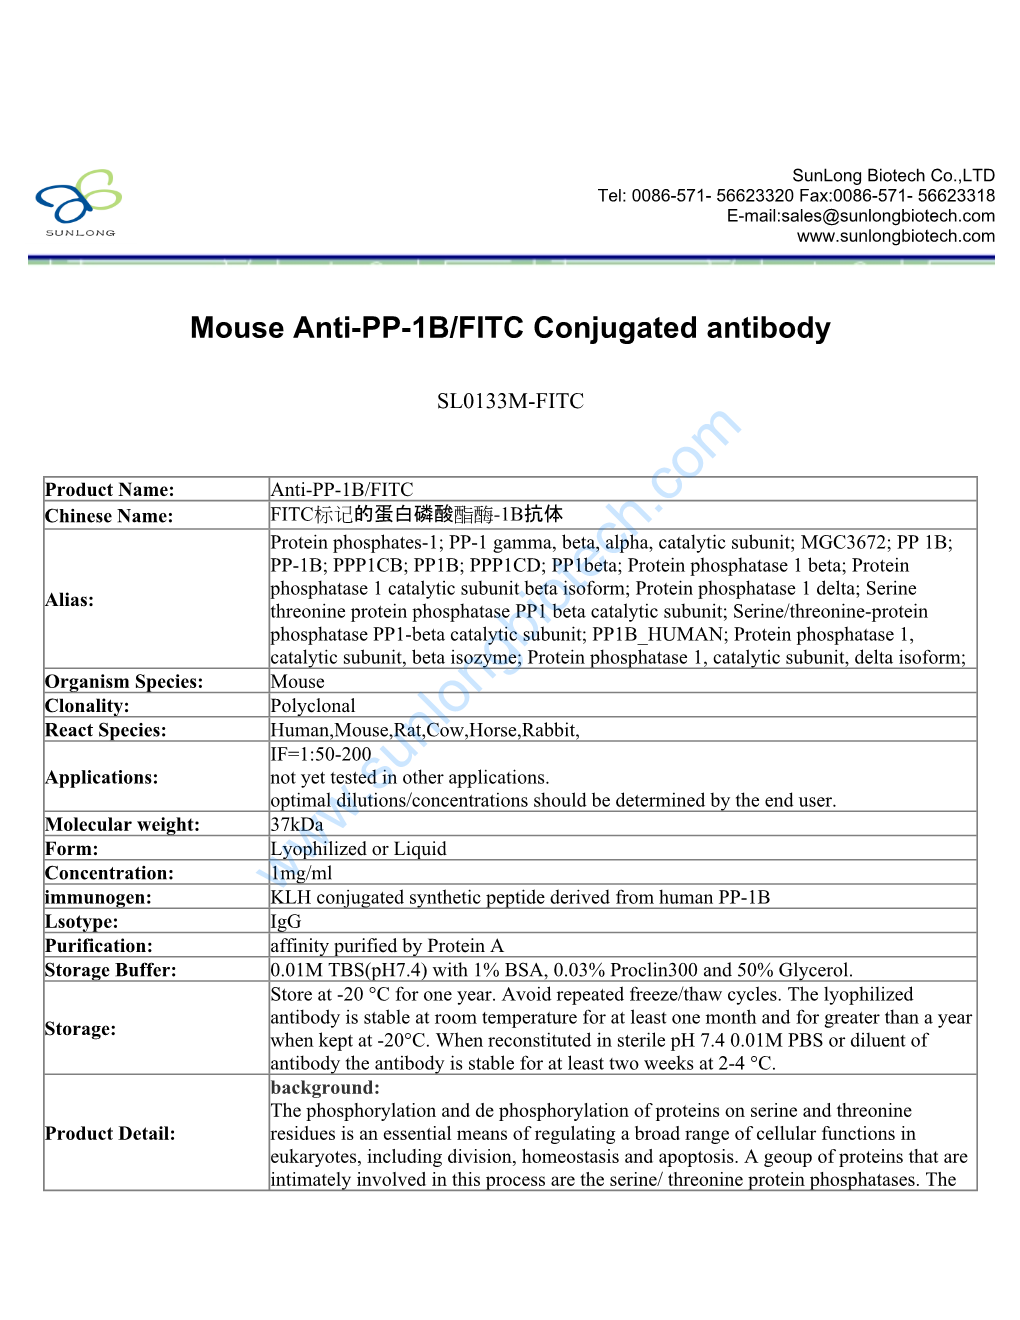 Mouse Anti-PP-1B/FITC Conjugated Antibody